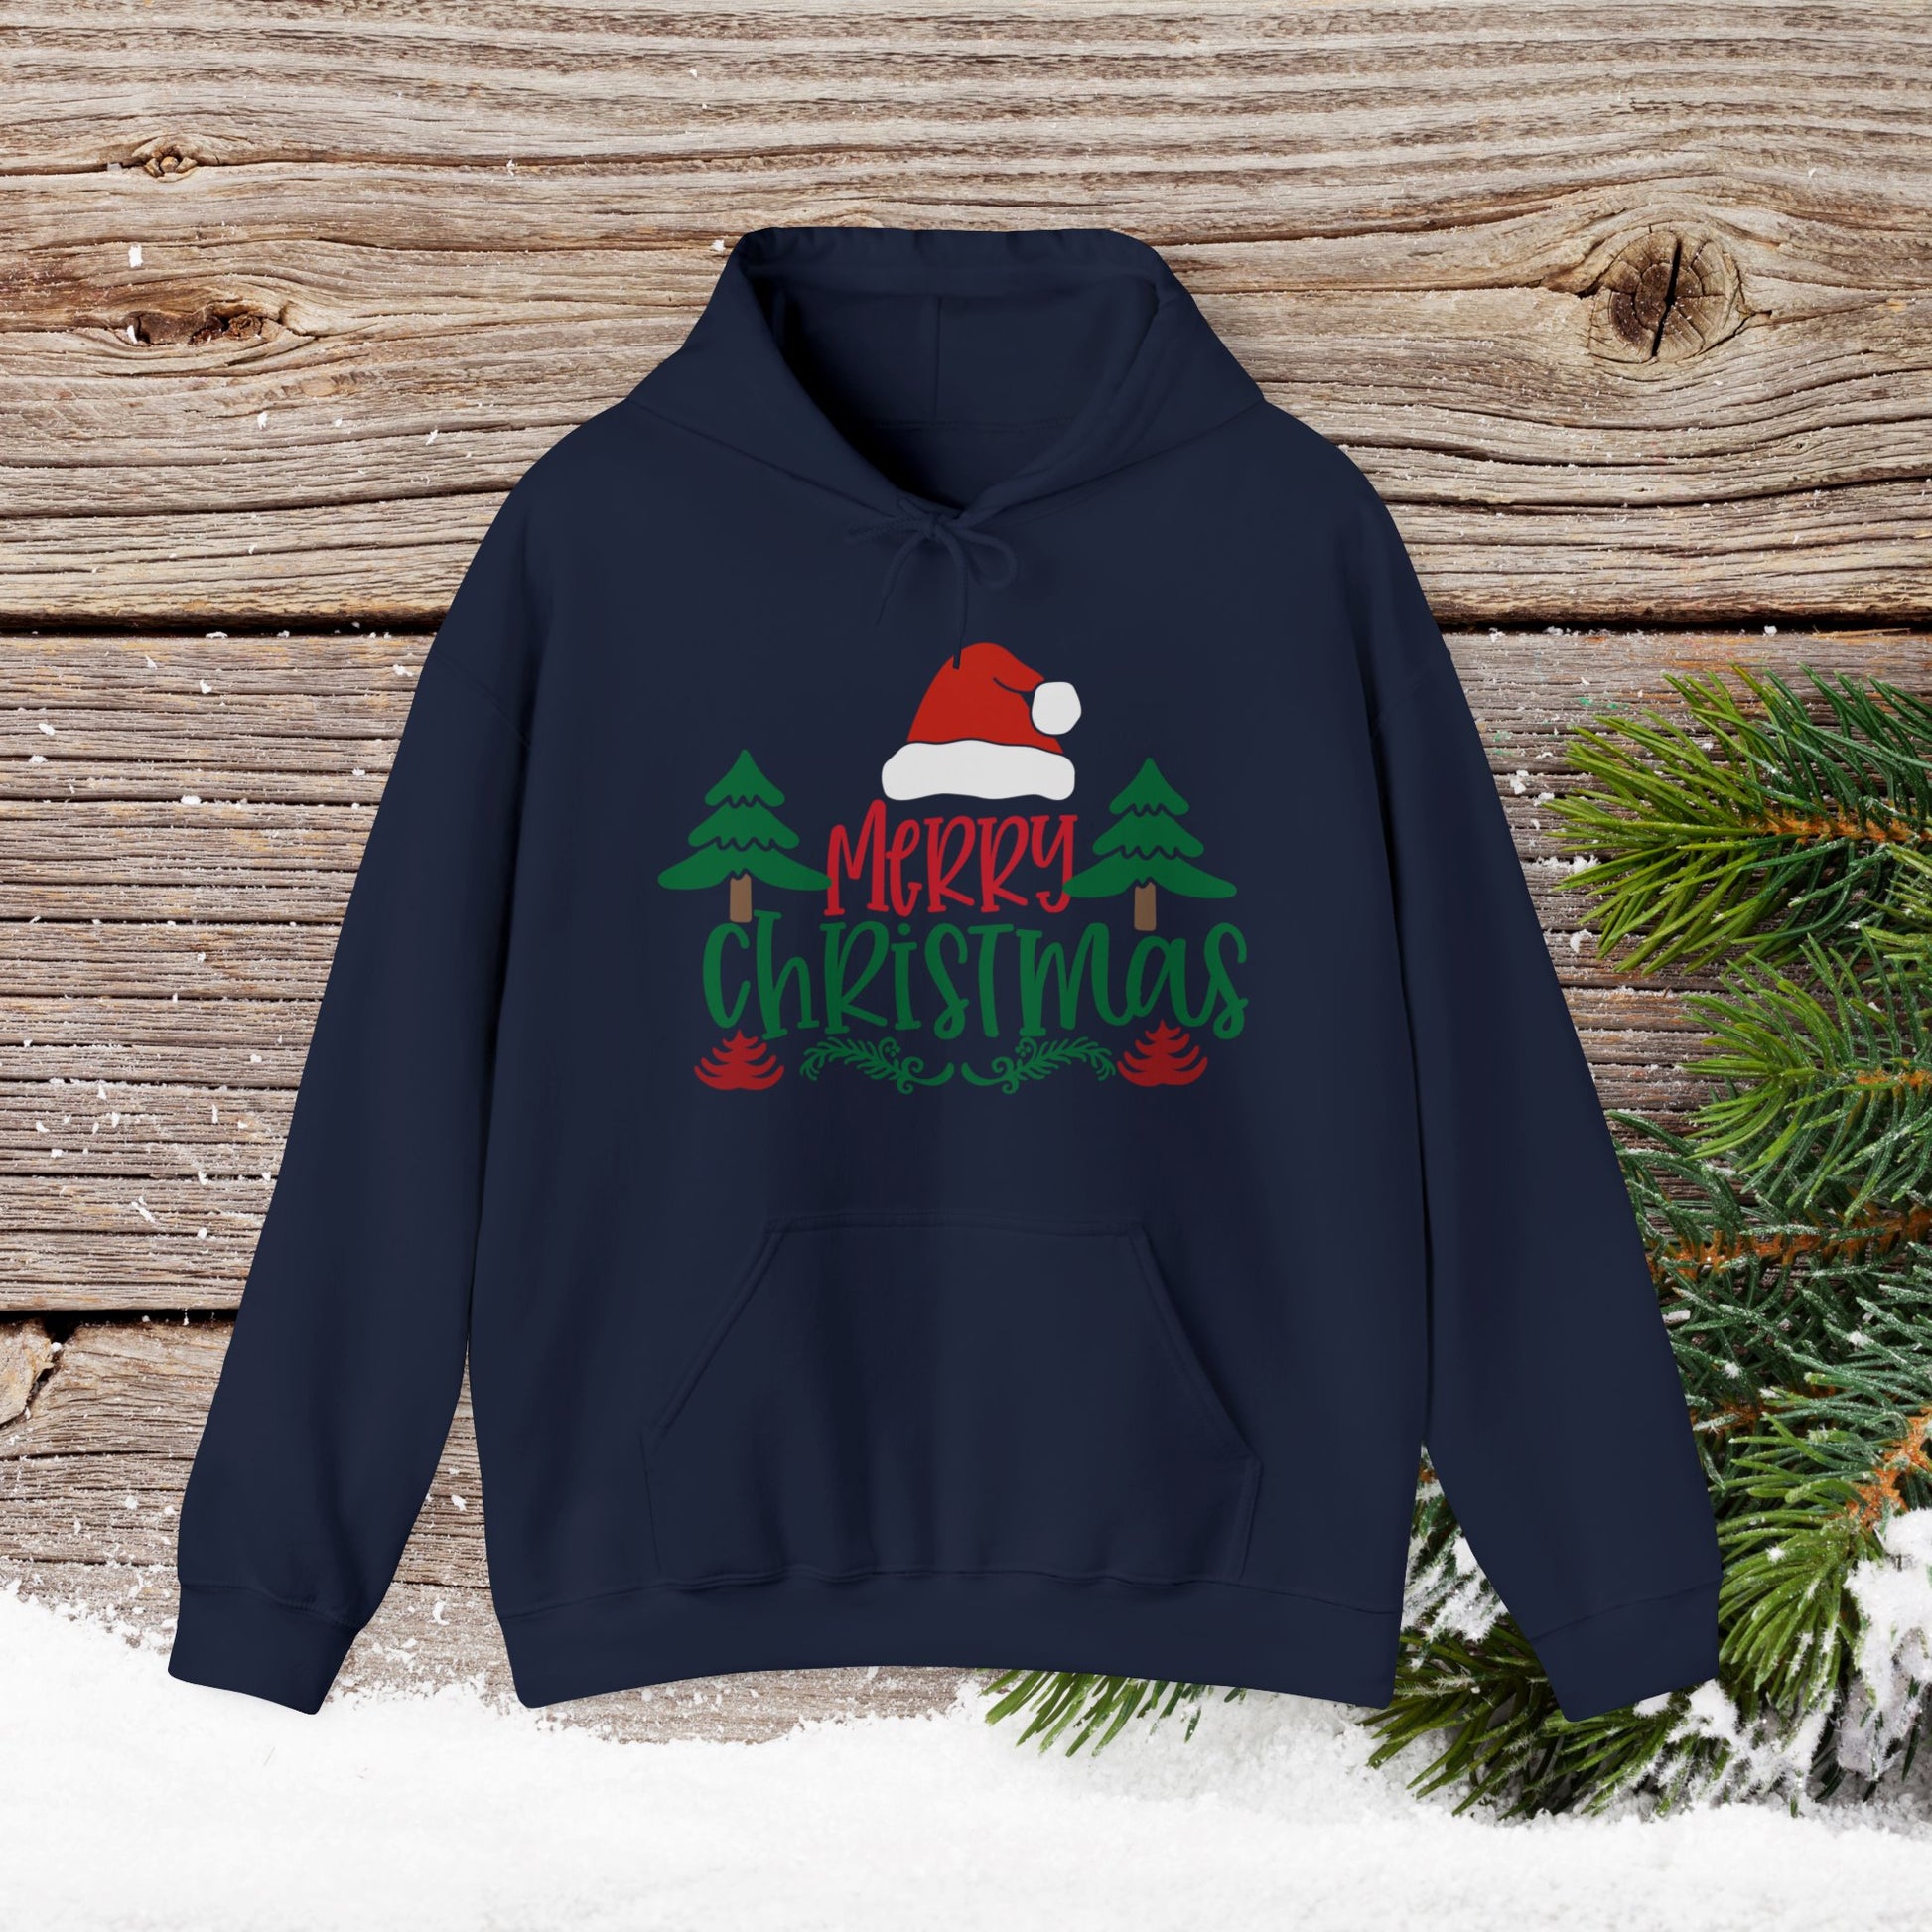 Christmas Hoodie - Merry Christmas - Cute Christmas Shirts - Youth and Adult Christmas Hooded Sweatshirt Hooded Sweatshirt Graphic Avenue Navy Adult Small 